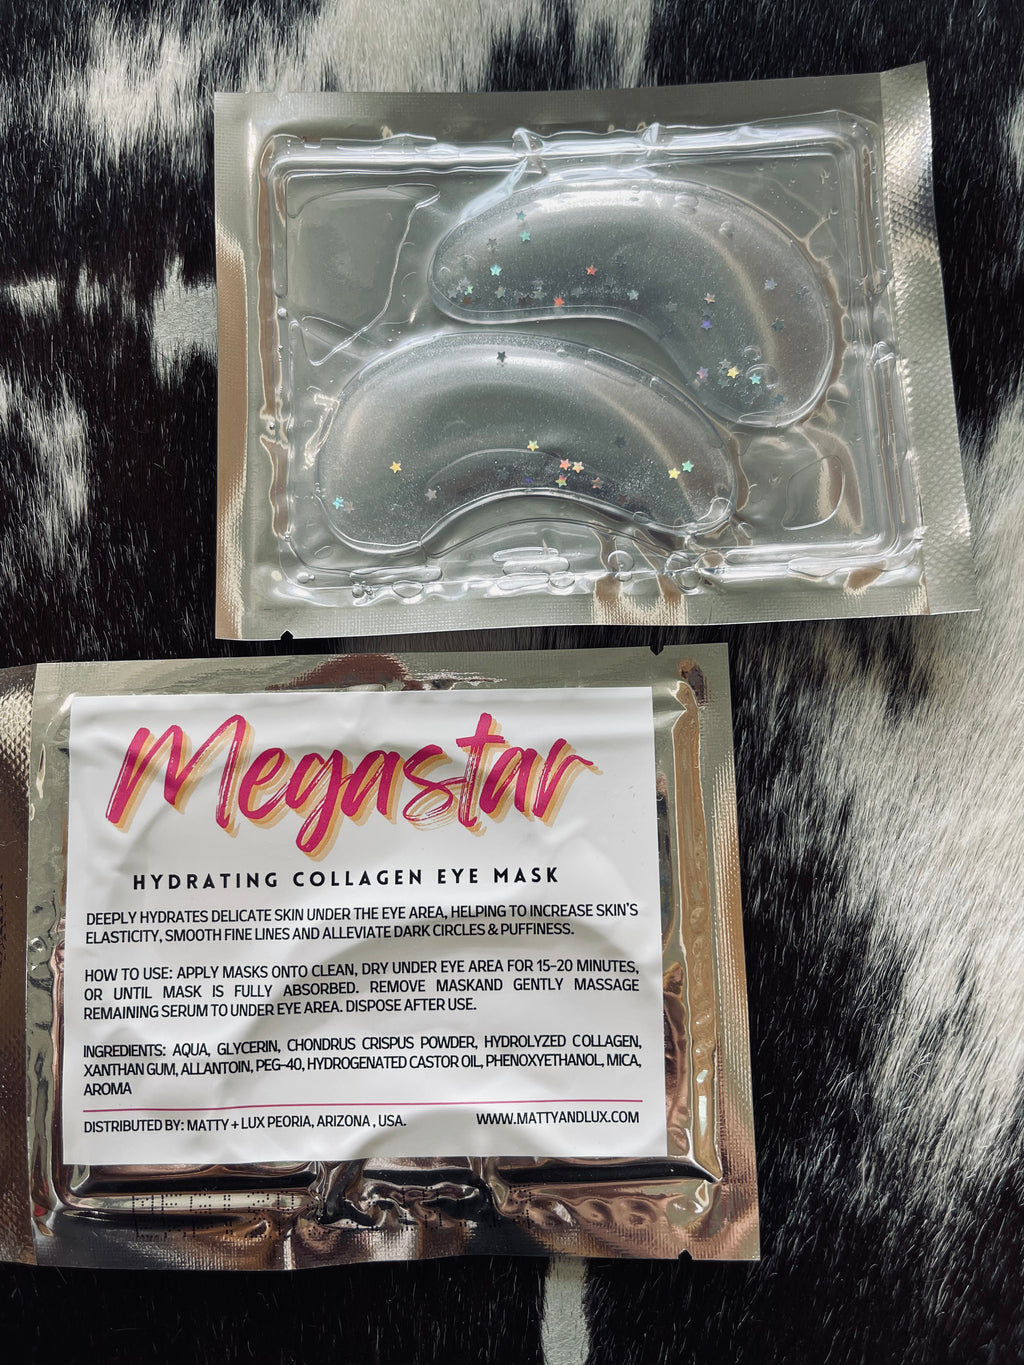 Megastar hydrating collagen eye mask